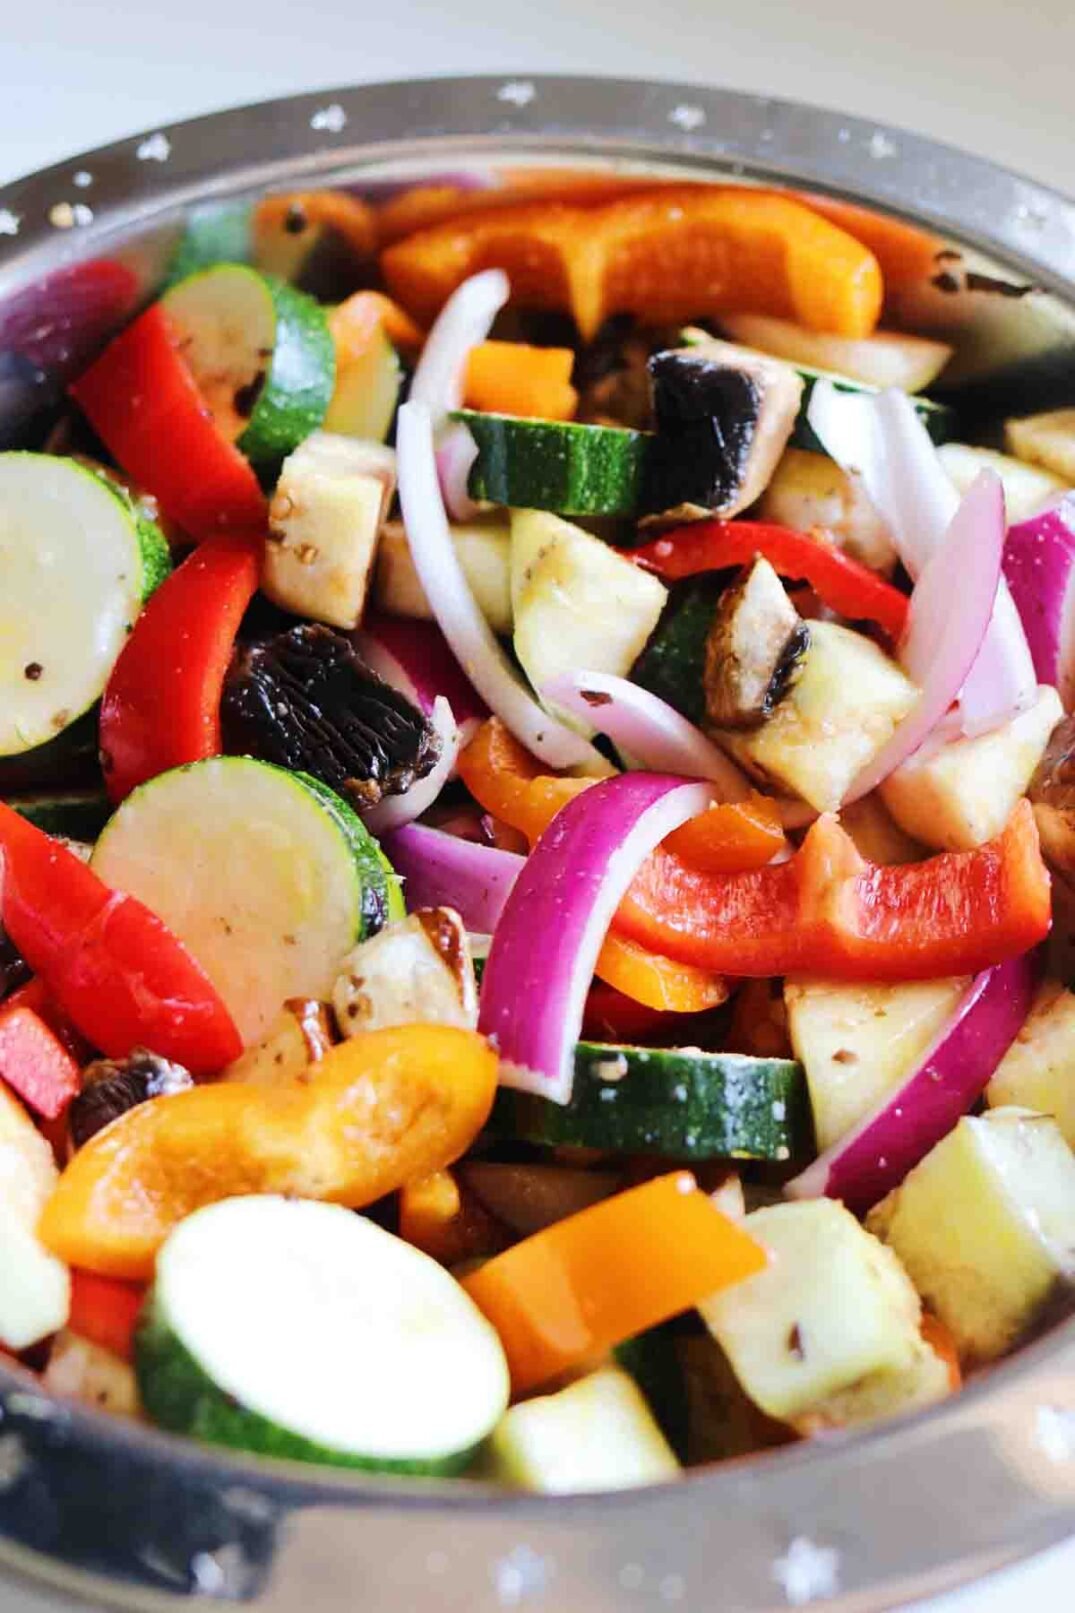 chopped colorful veggies in a big silver bowl.